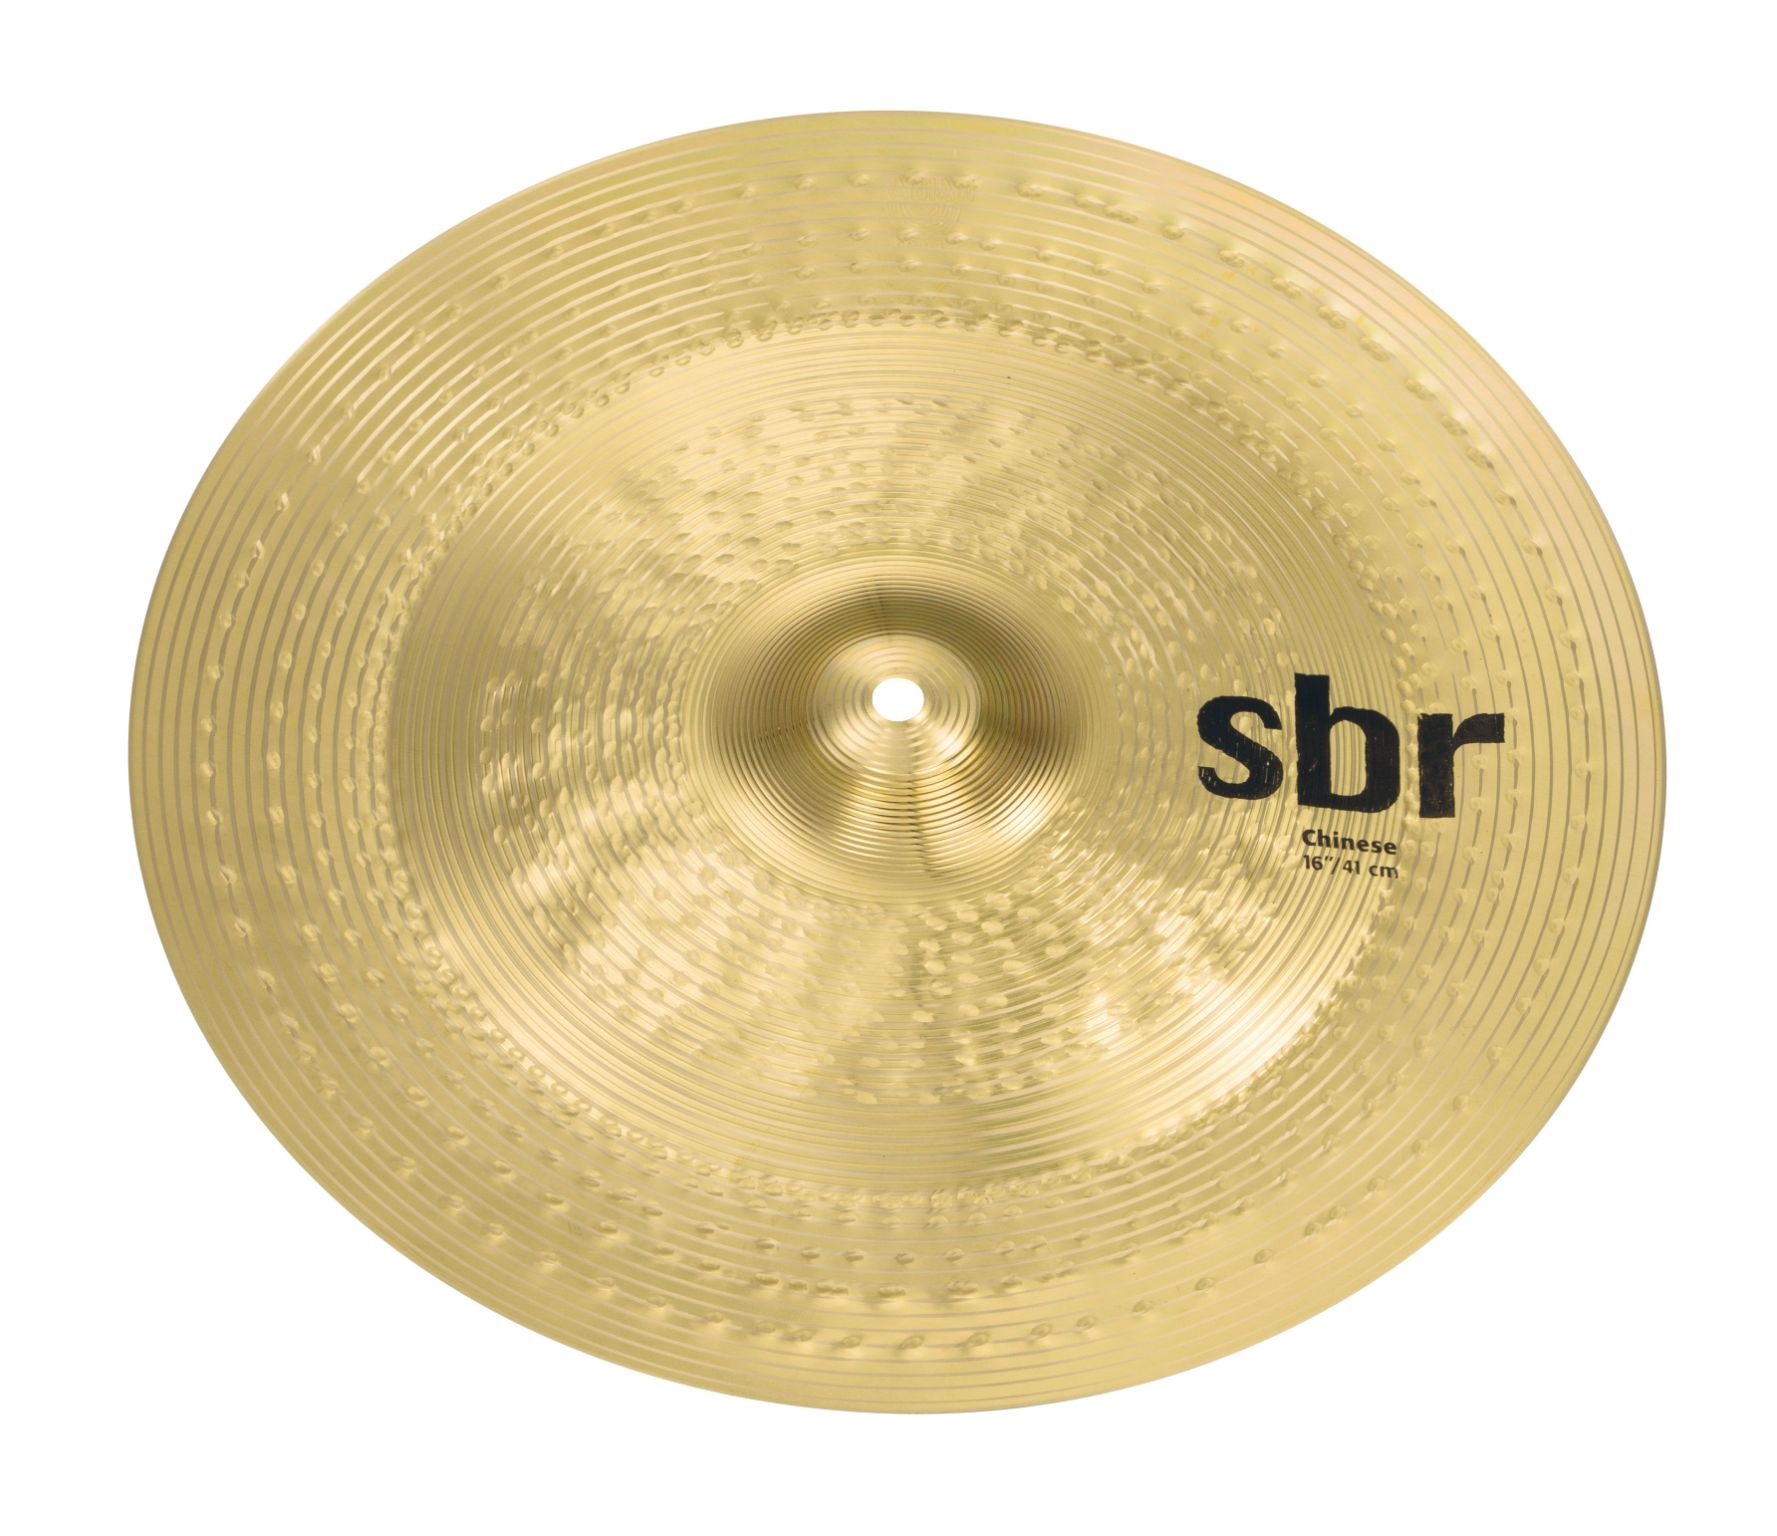 Sabian SBR1422 14-Inch SBR Concert Band Hand Cymbals - Pair, Brass